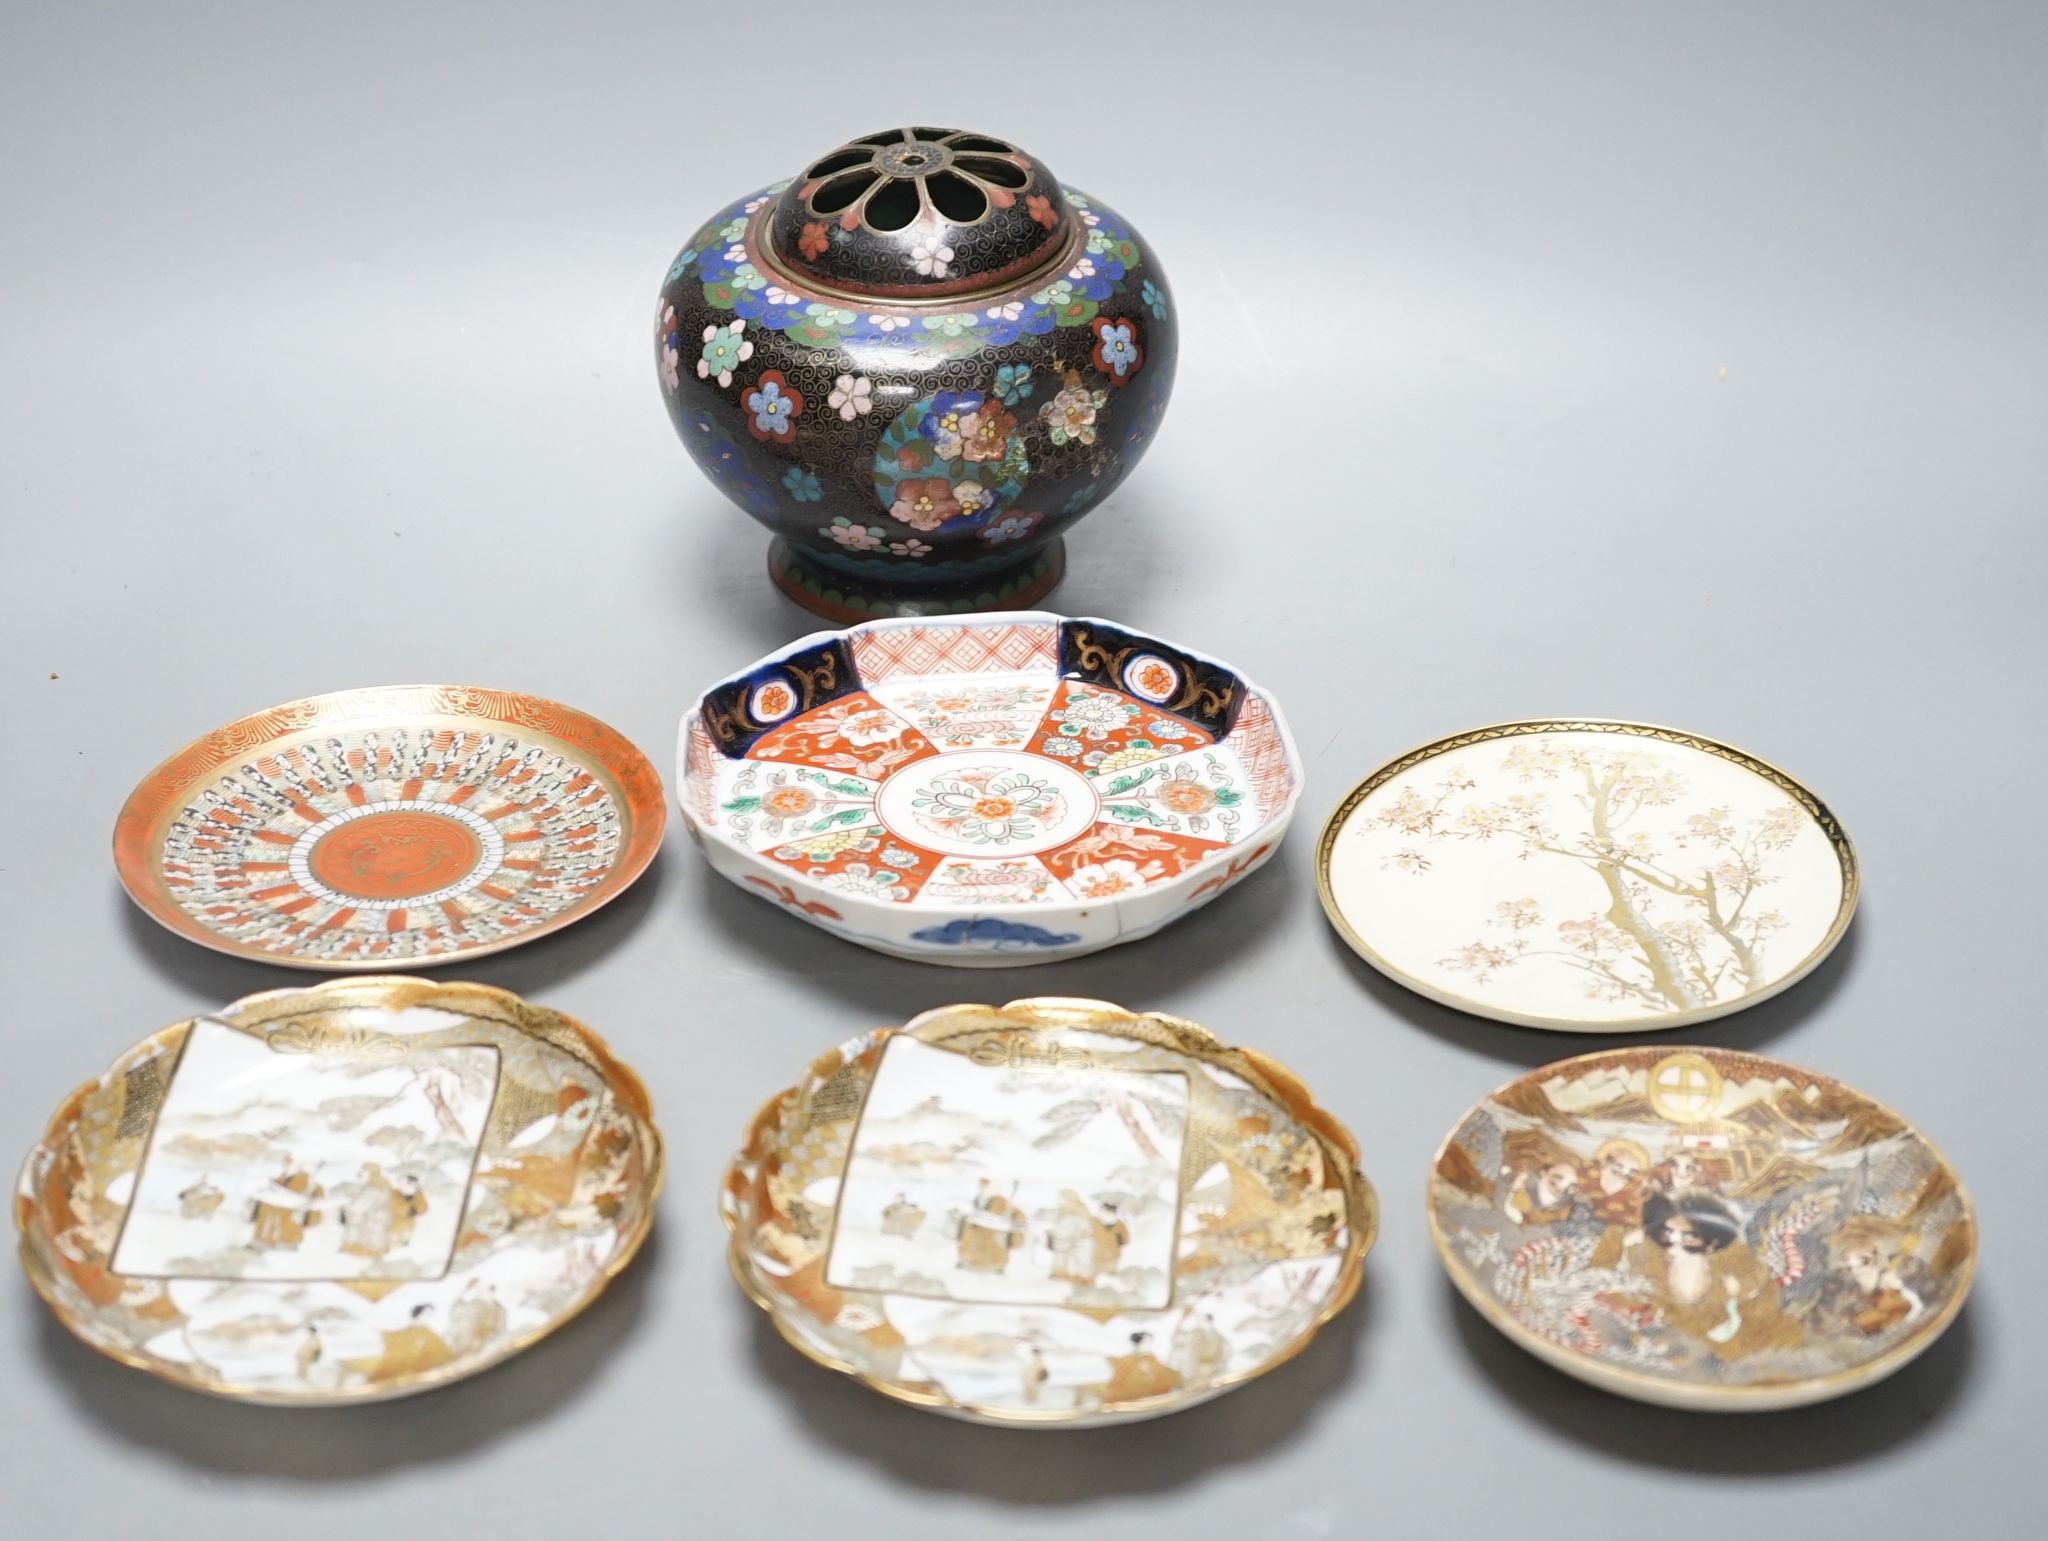 Two Japanese Satsuma pottery saucers, three Kutani saucers, and Imari dish and a Japanese cloisonné enamel koro and cover